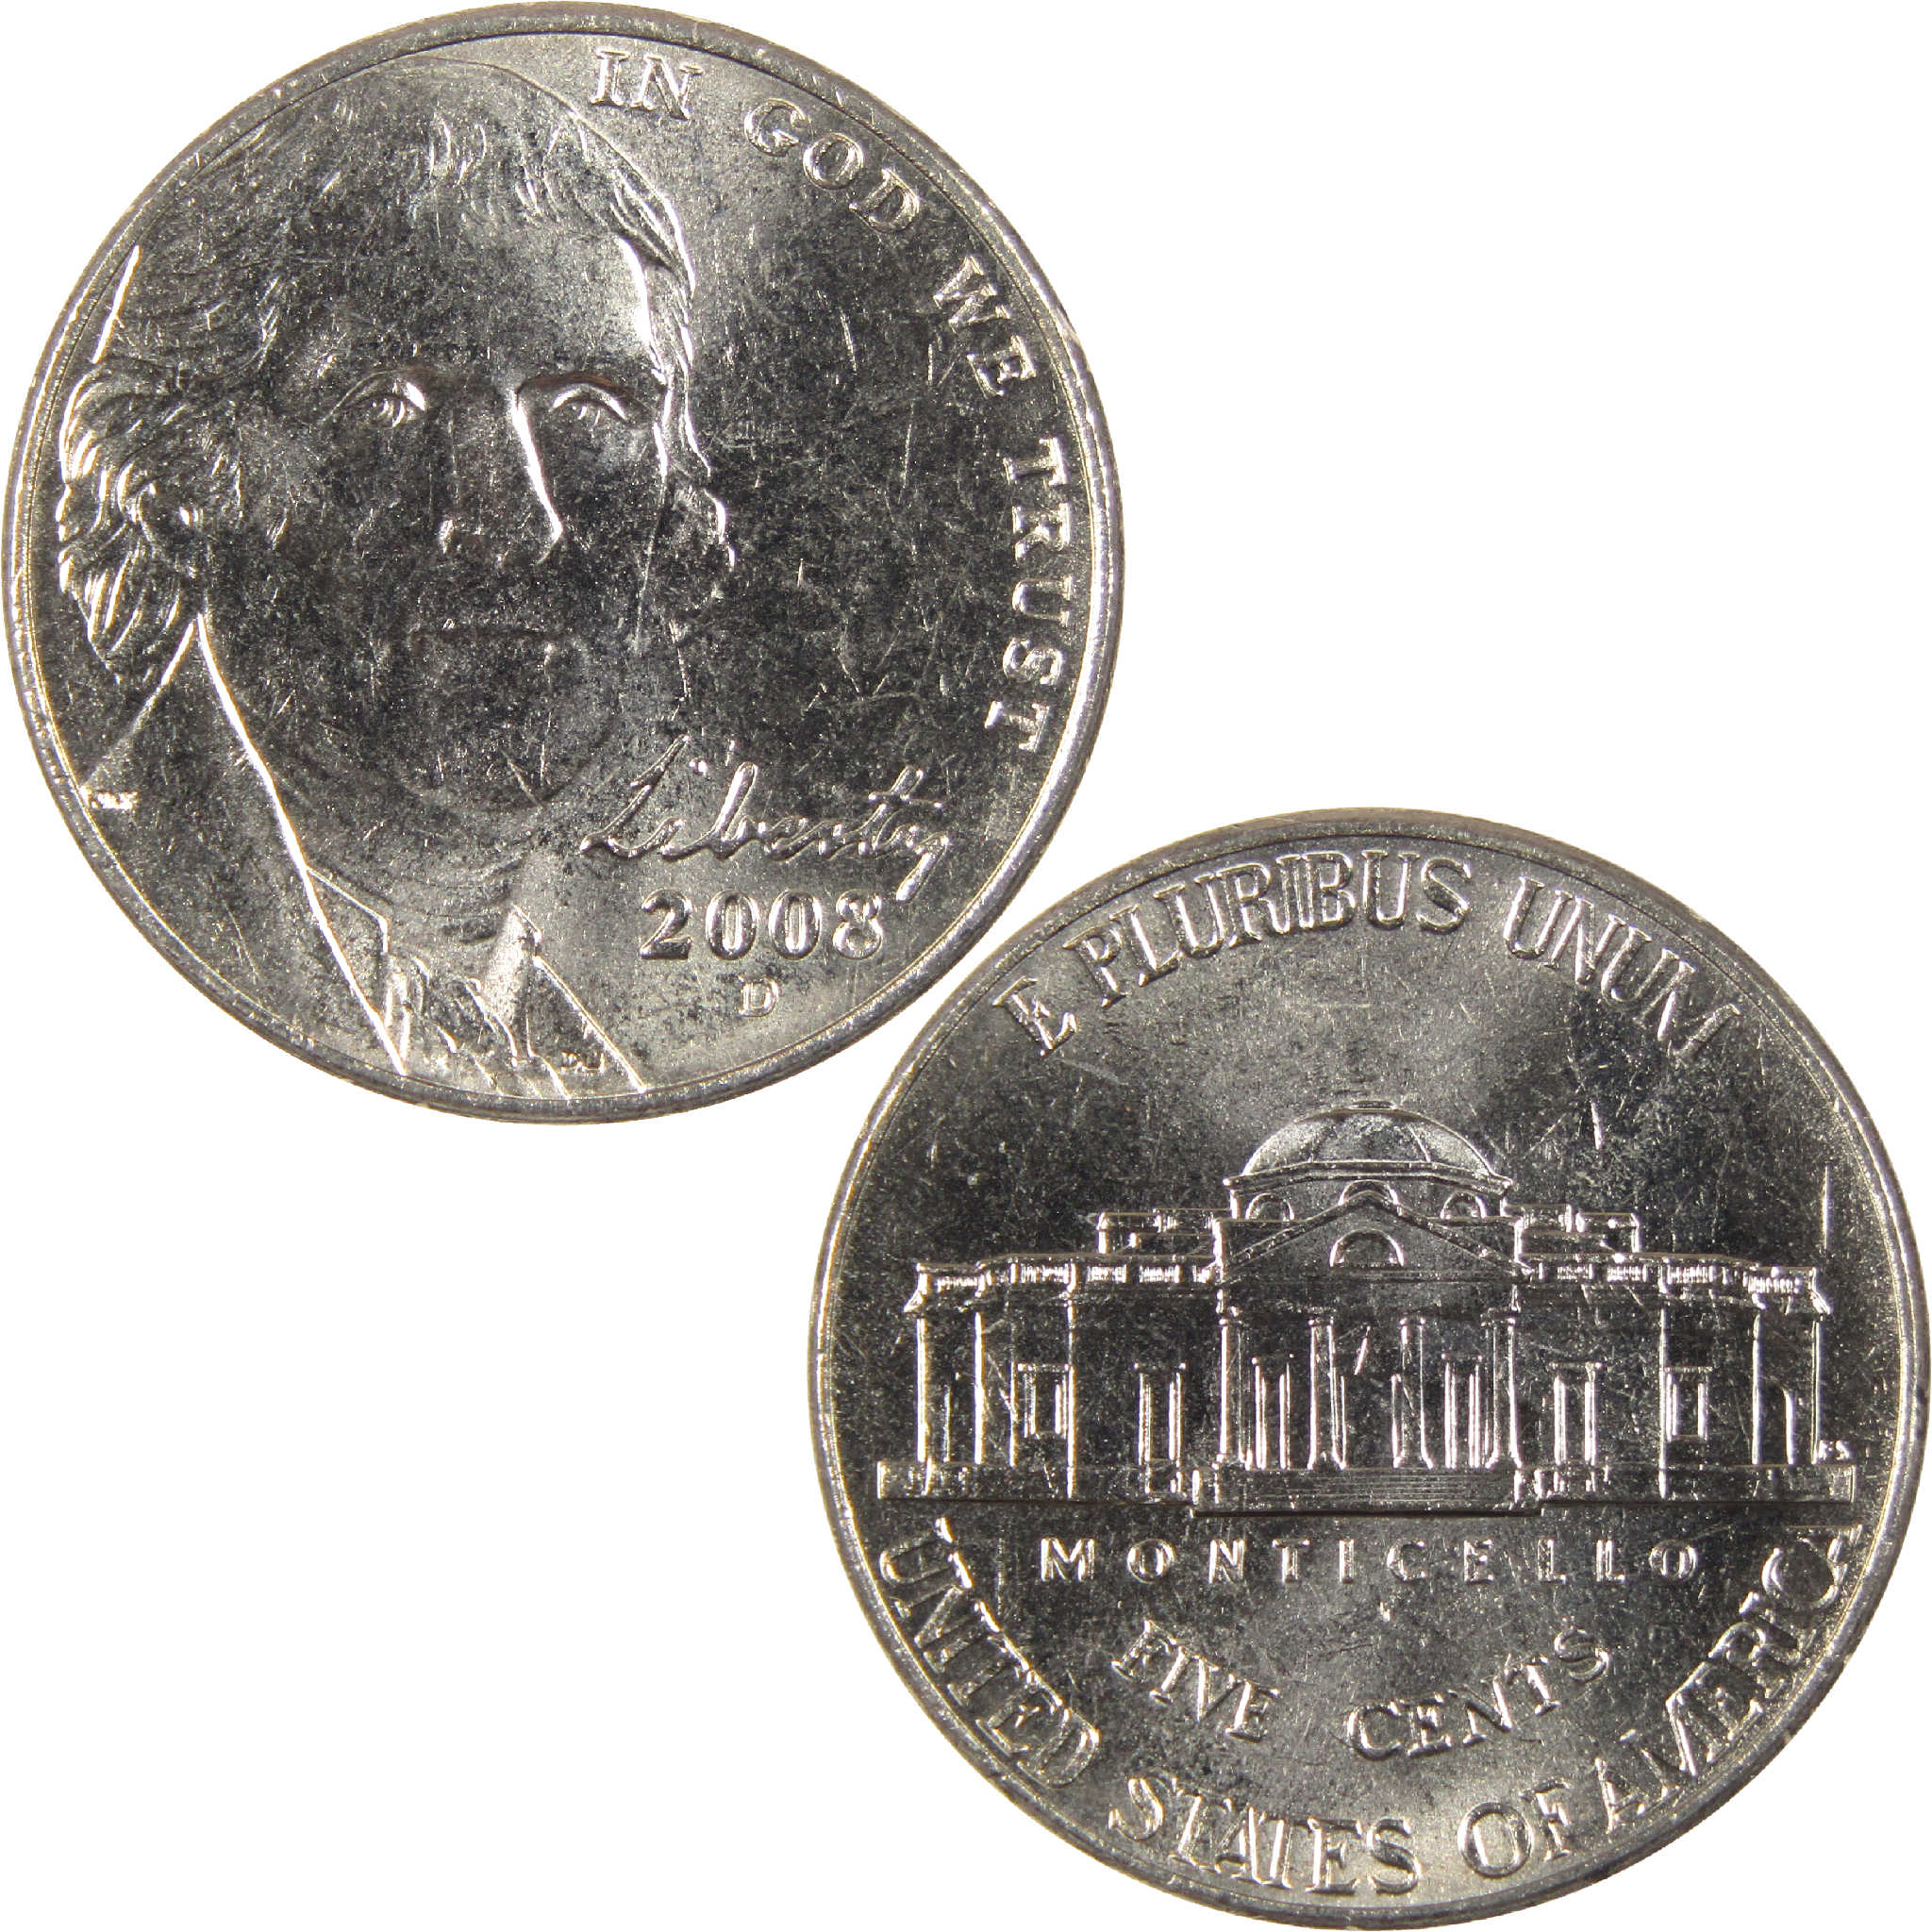 2008 D Jefferson Nickel Uncirculated 5c Coin